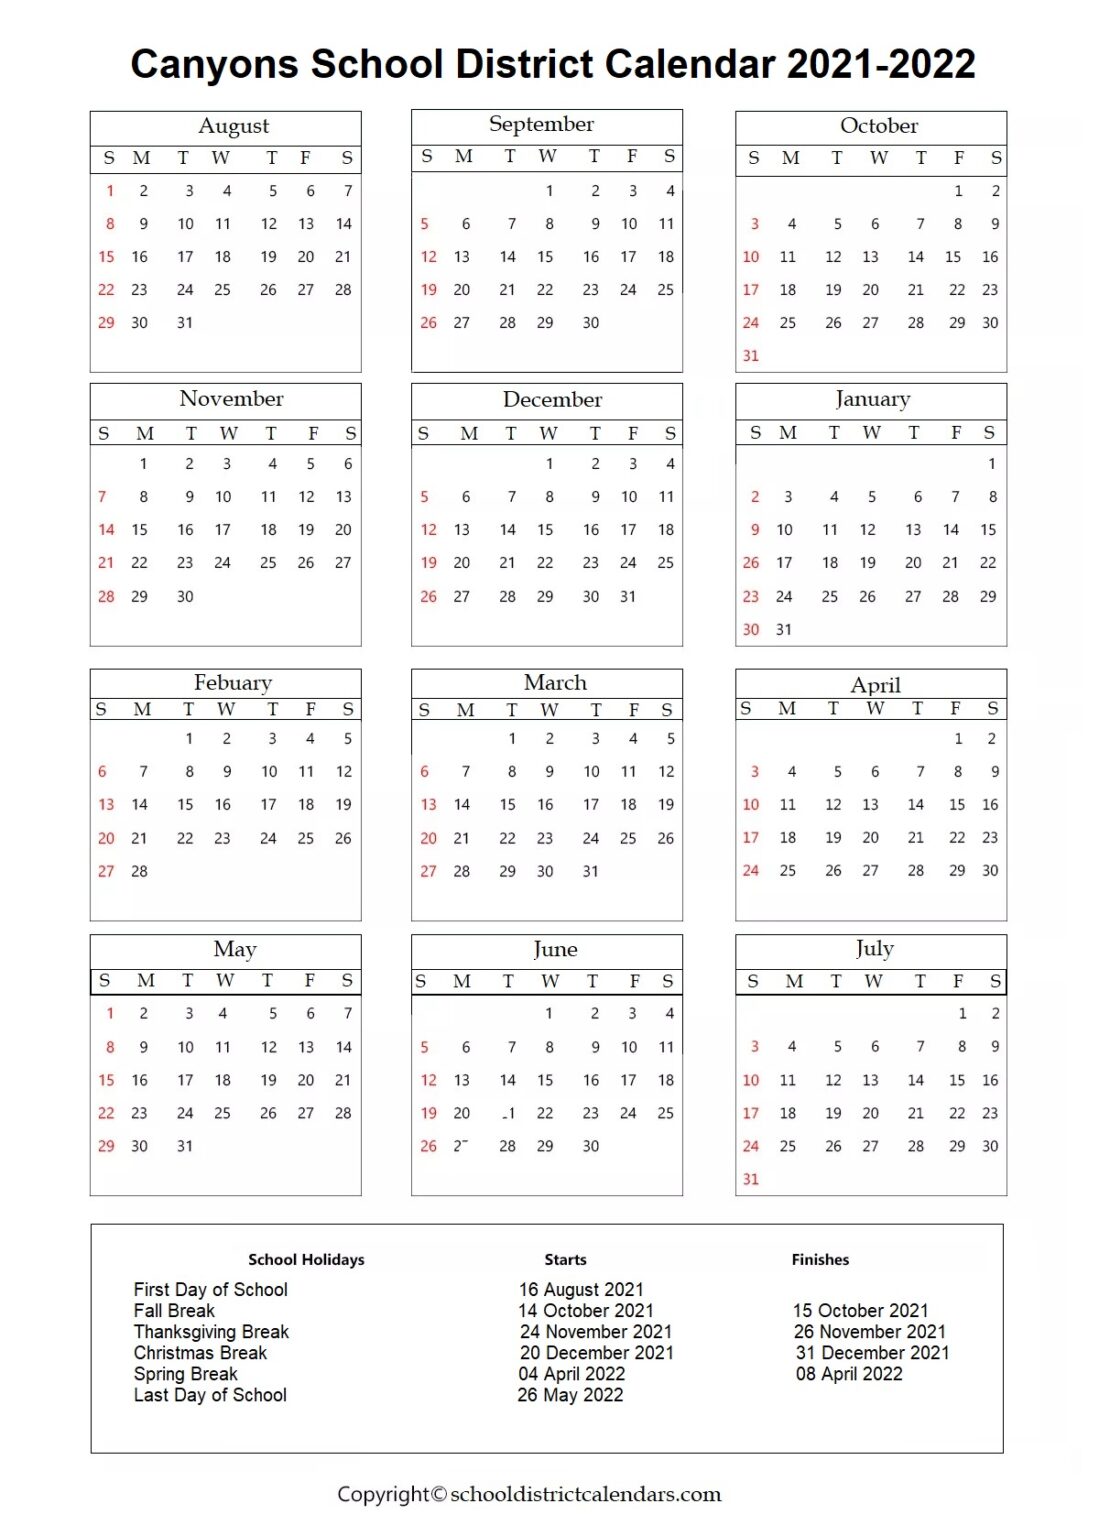 Canyons School District Utah Calendar Holidays 2021 School District